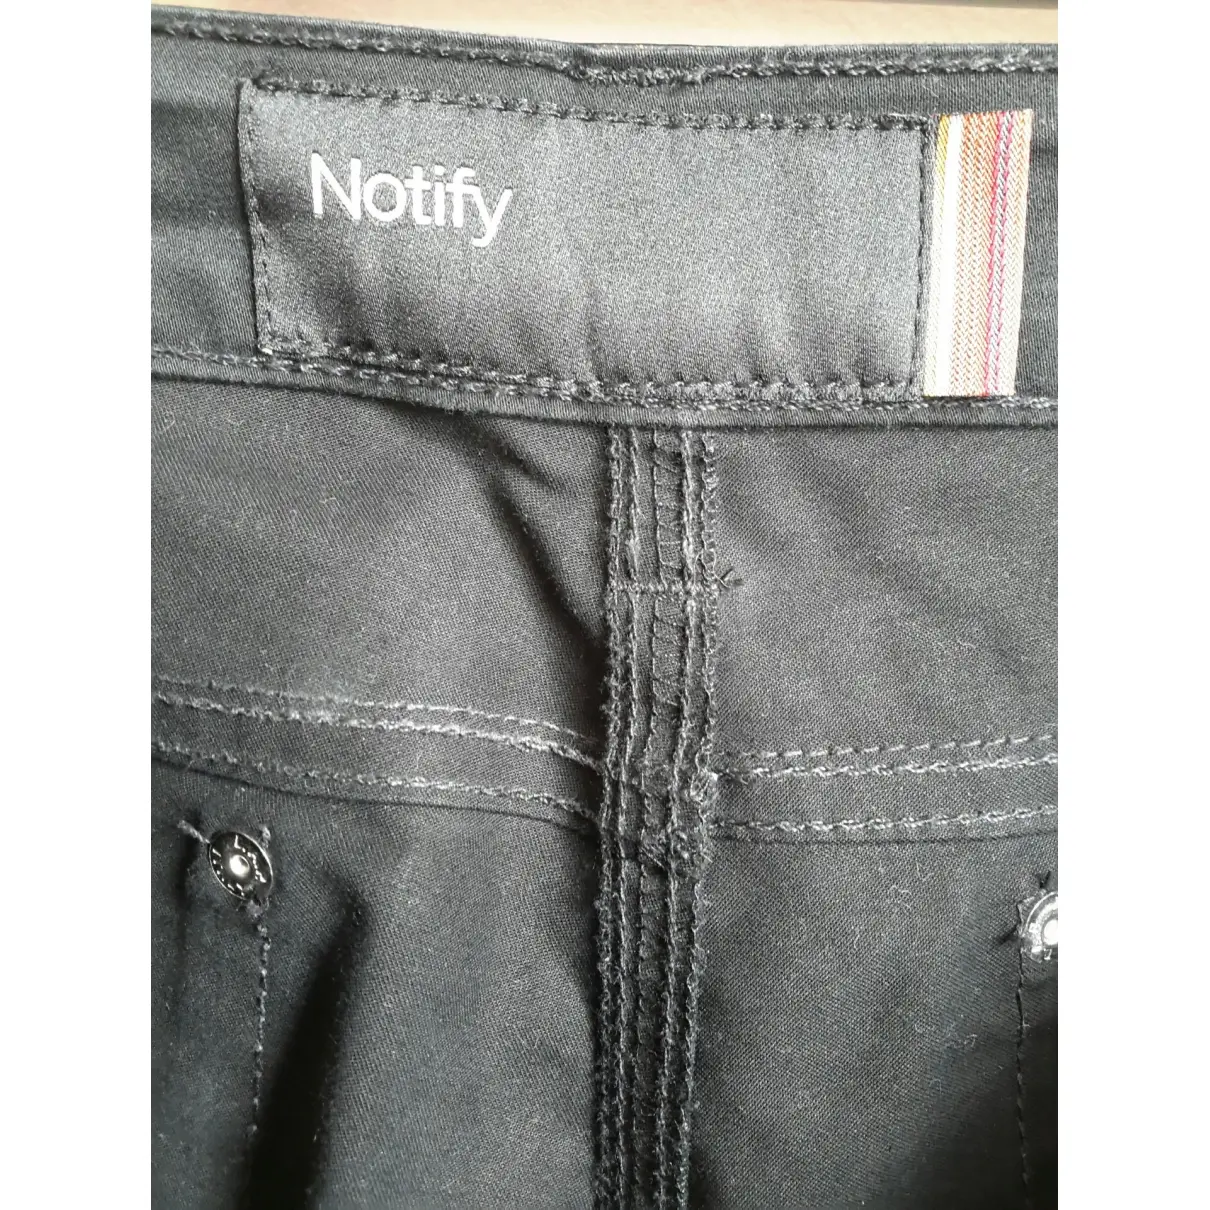 Buy Notify Straight pants online